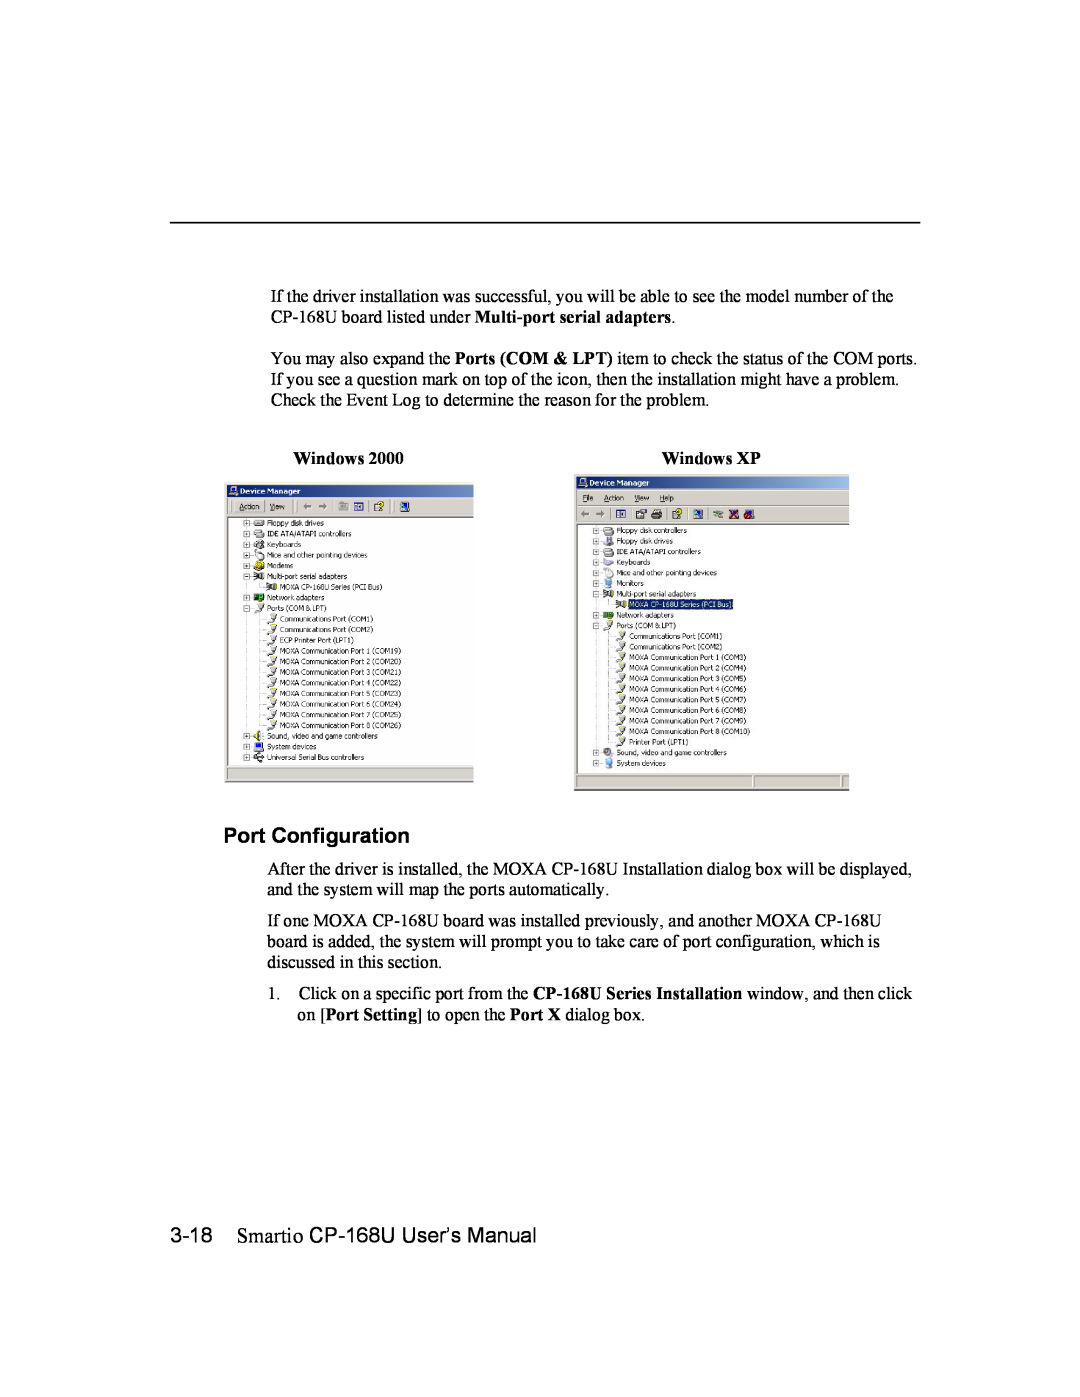 Moxa Technologies user manual Smartio CP-168U User’s Manual, Port Configuration 